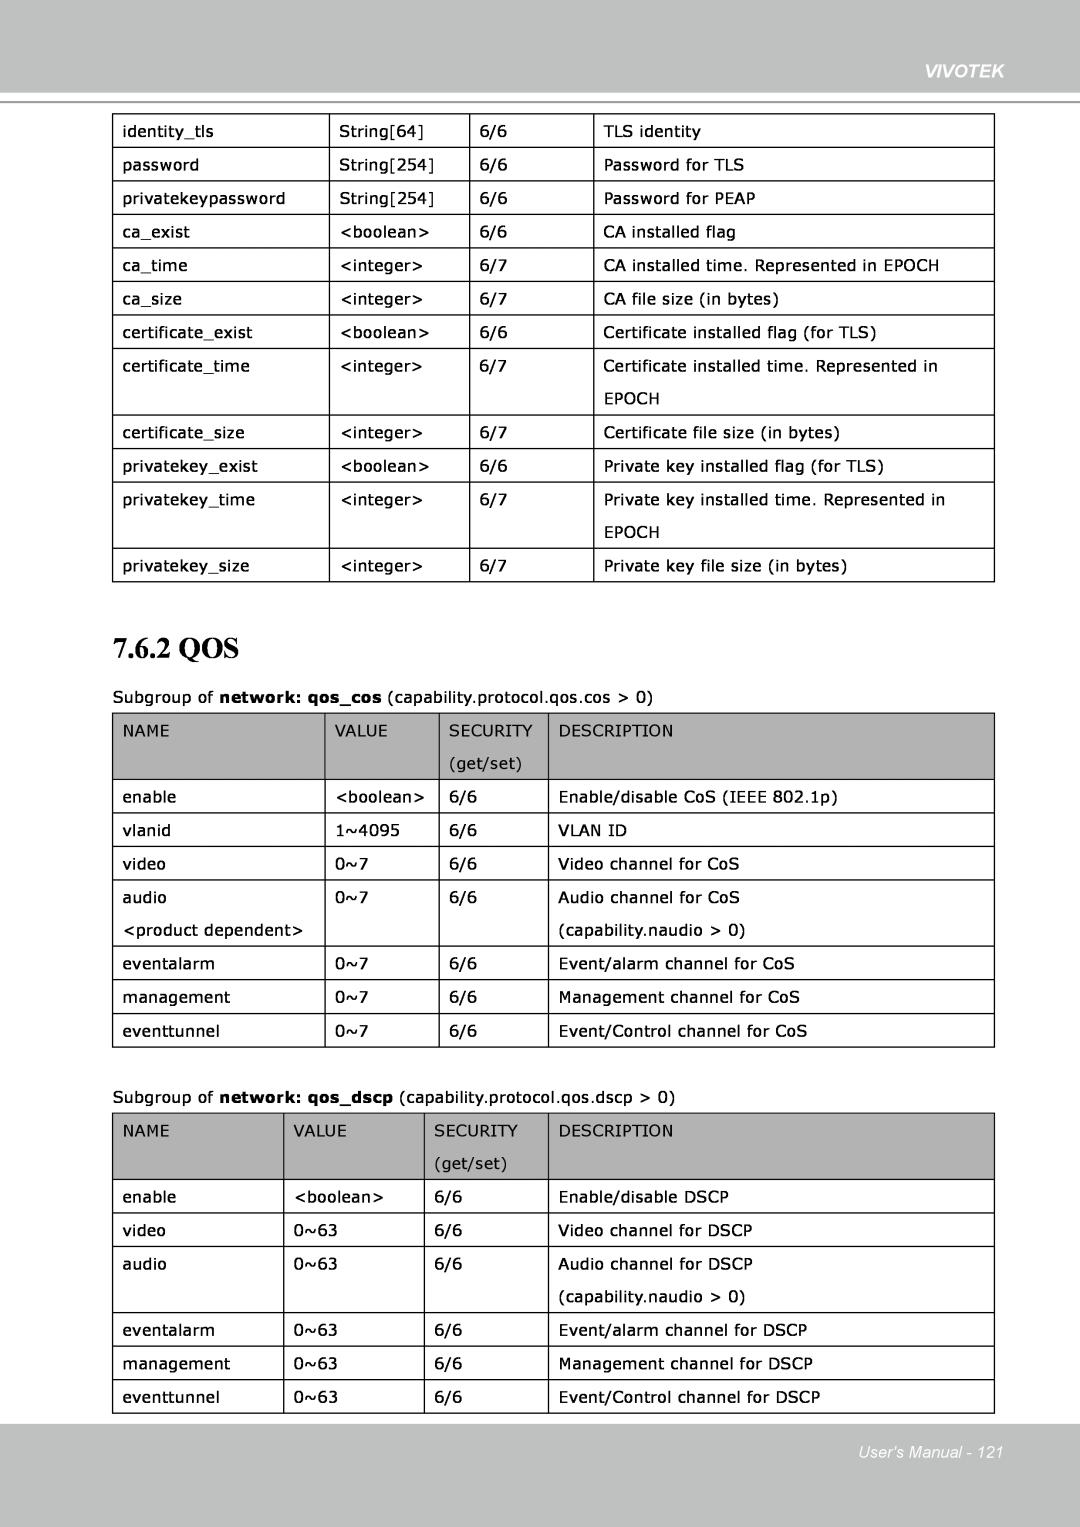 Vivotek IP8151 manual 7.6.2 QOS, Vivotek, Users Manual 